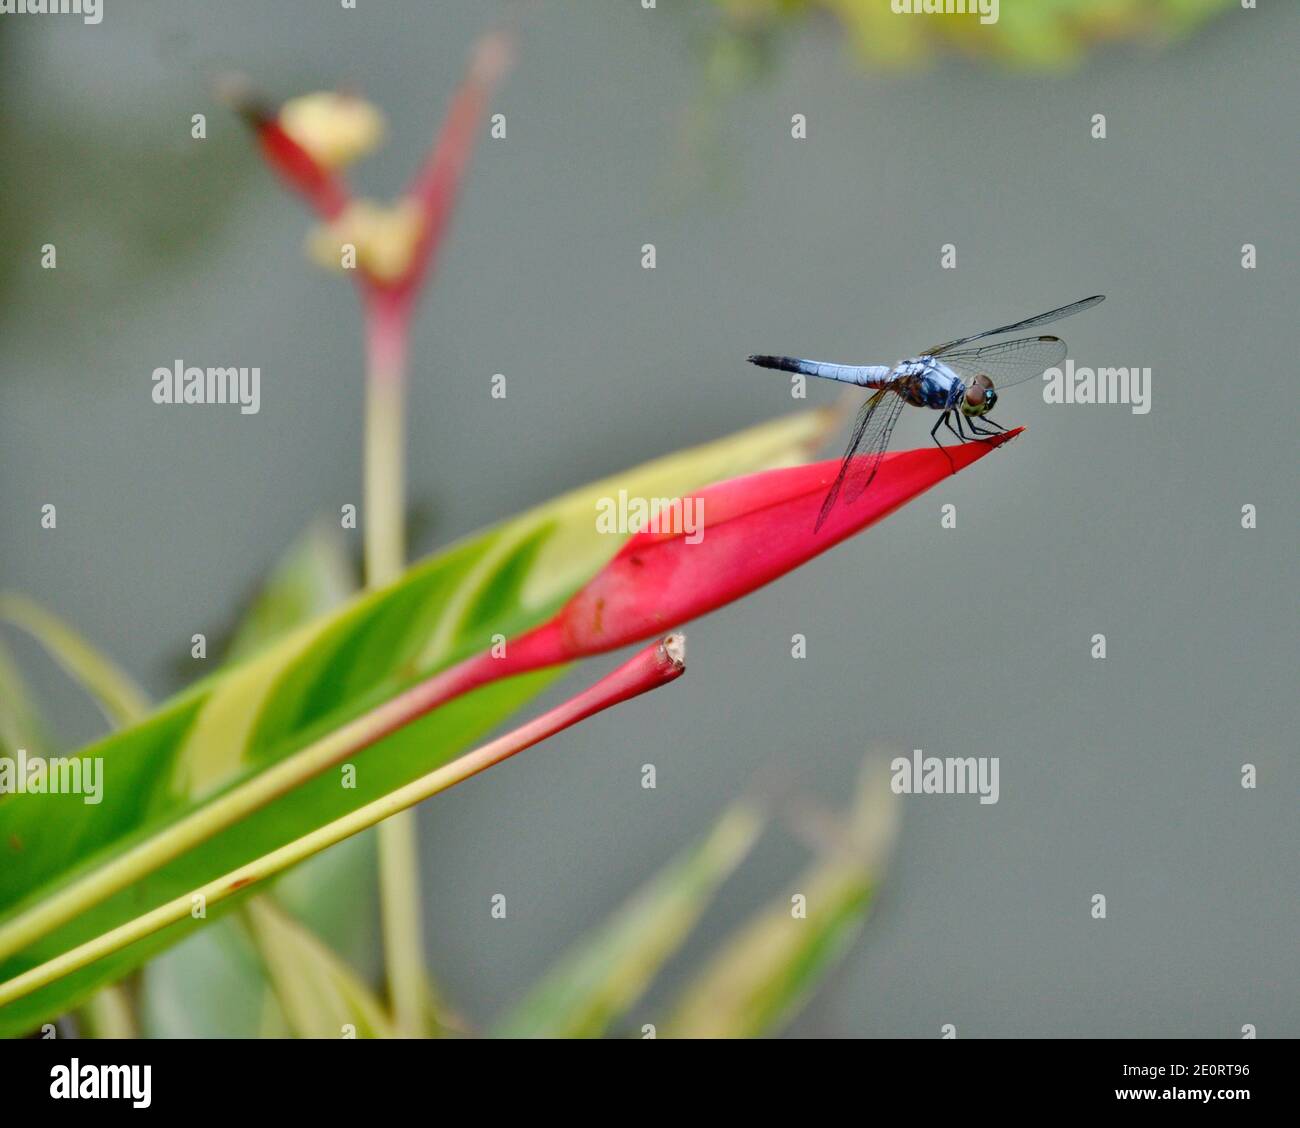 Resting Dragonfly Stock Photo